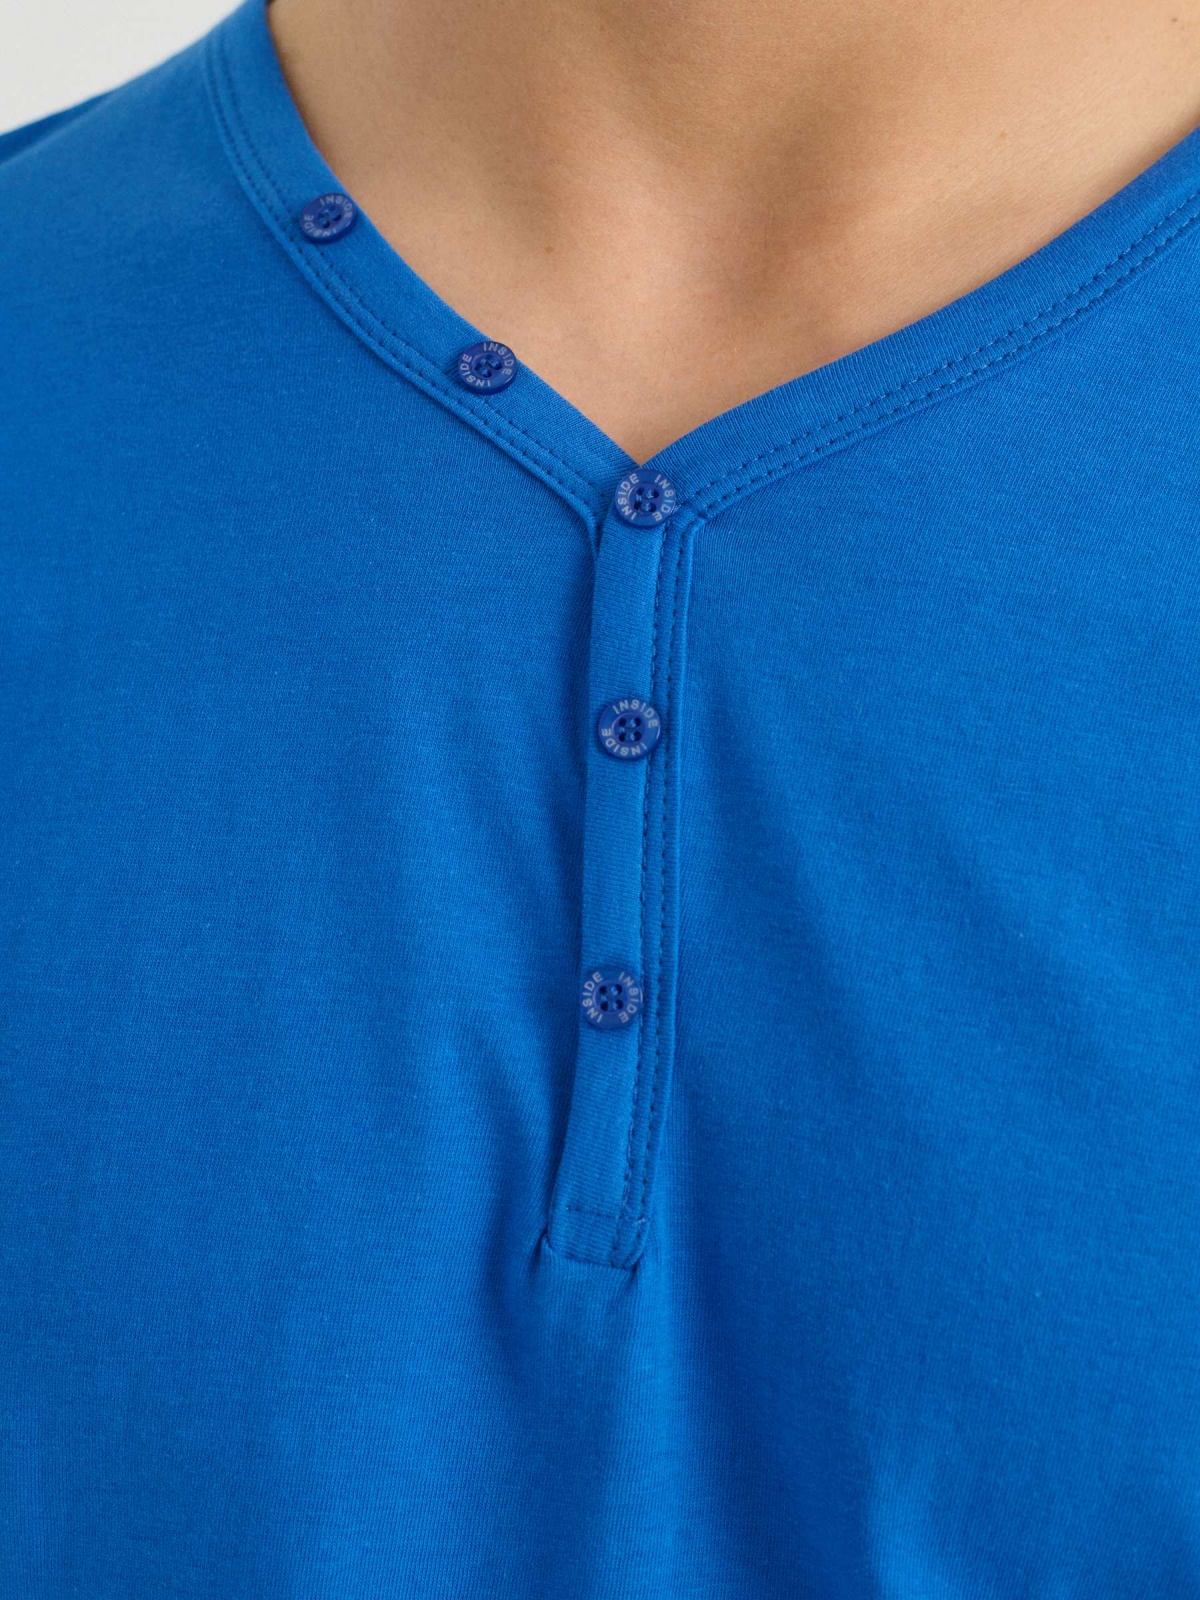 Camiseta cuello con botones azul vista detalle